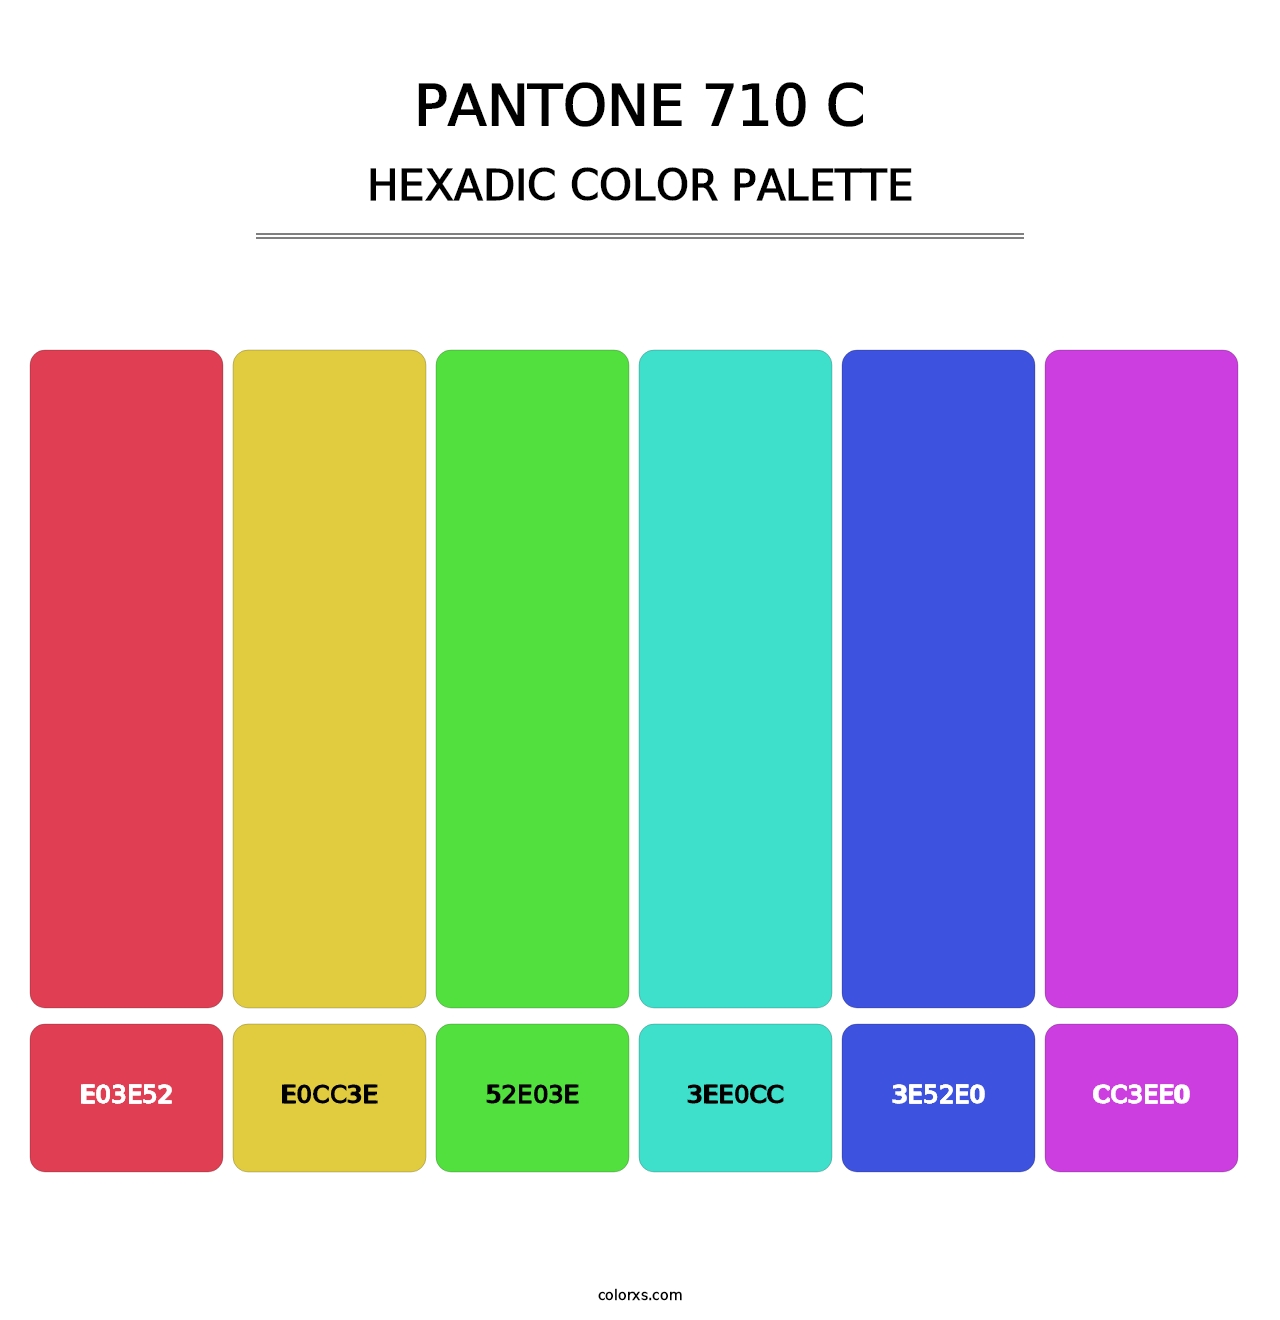 PANTONE 710 C - Hexadic Color Palette